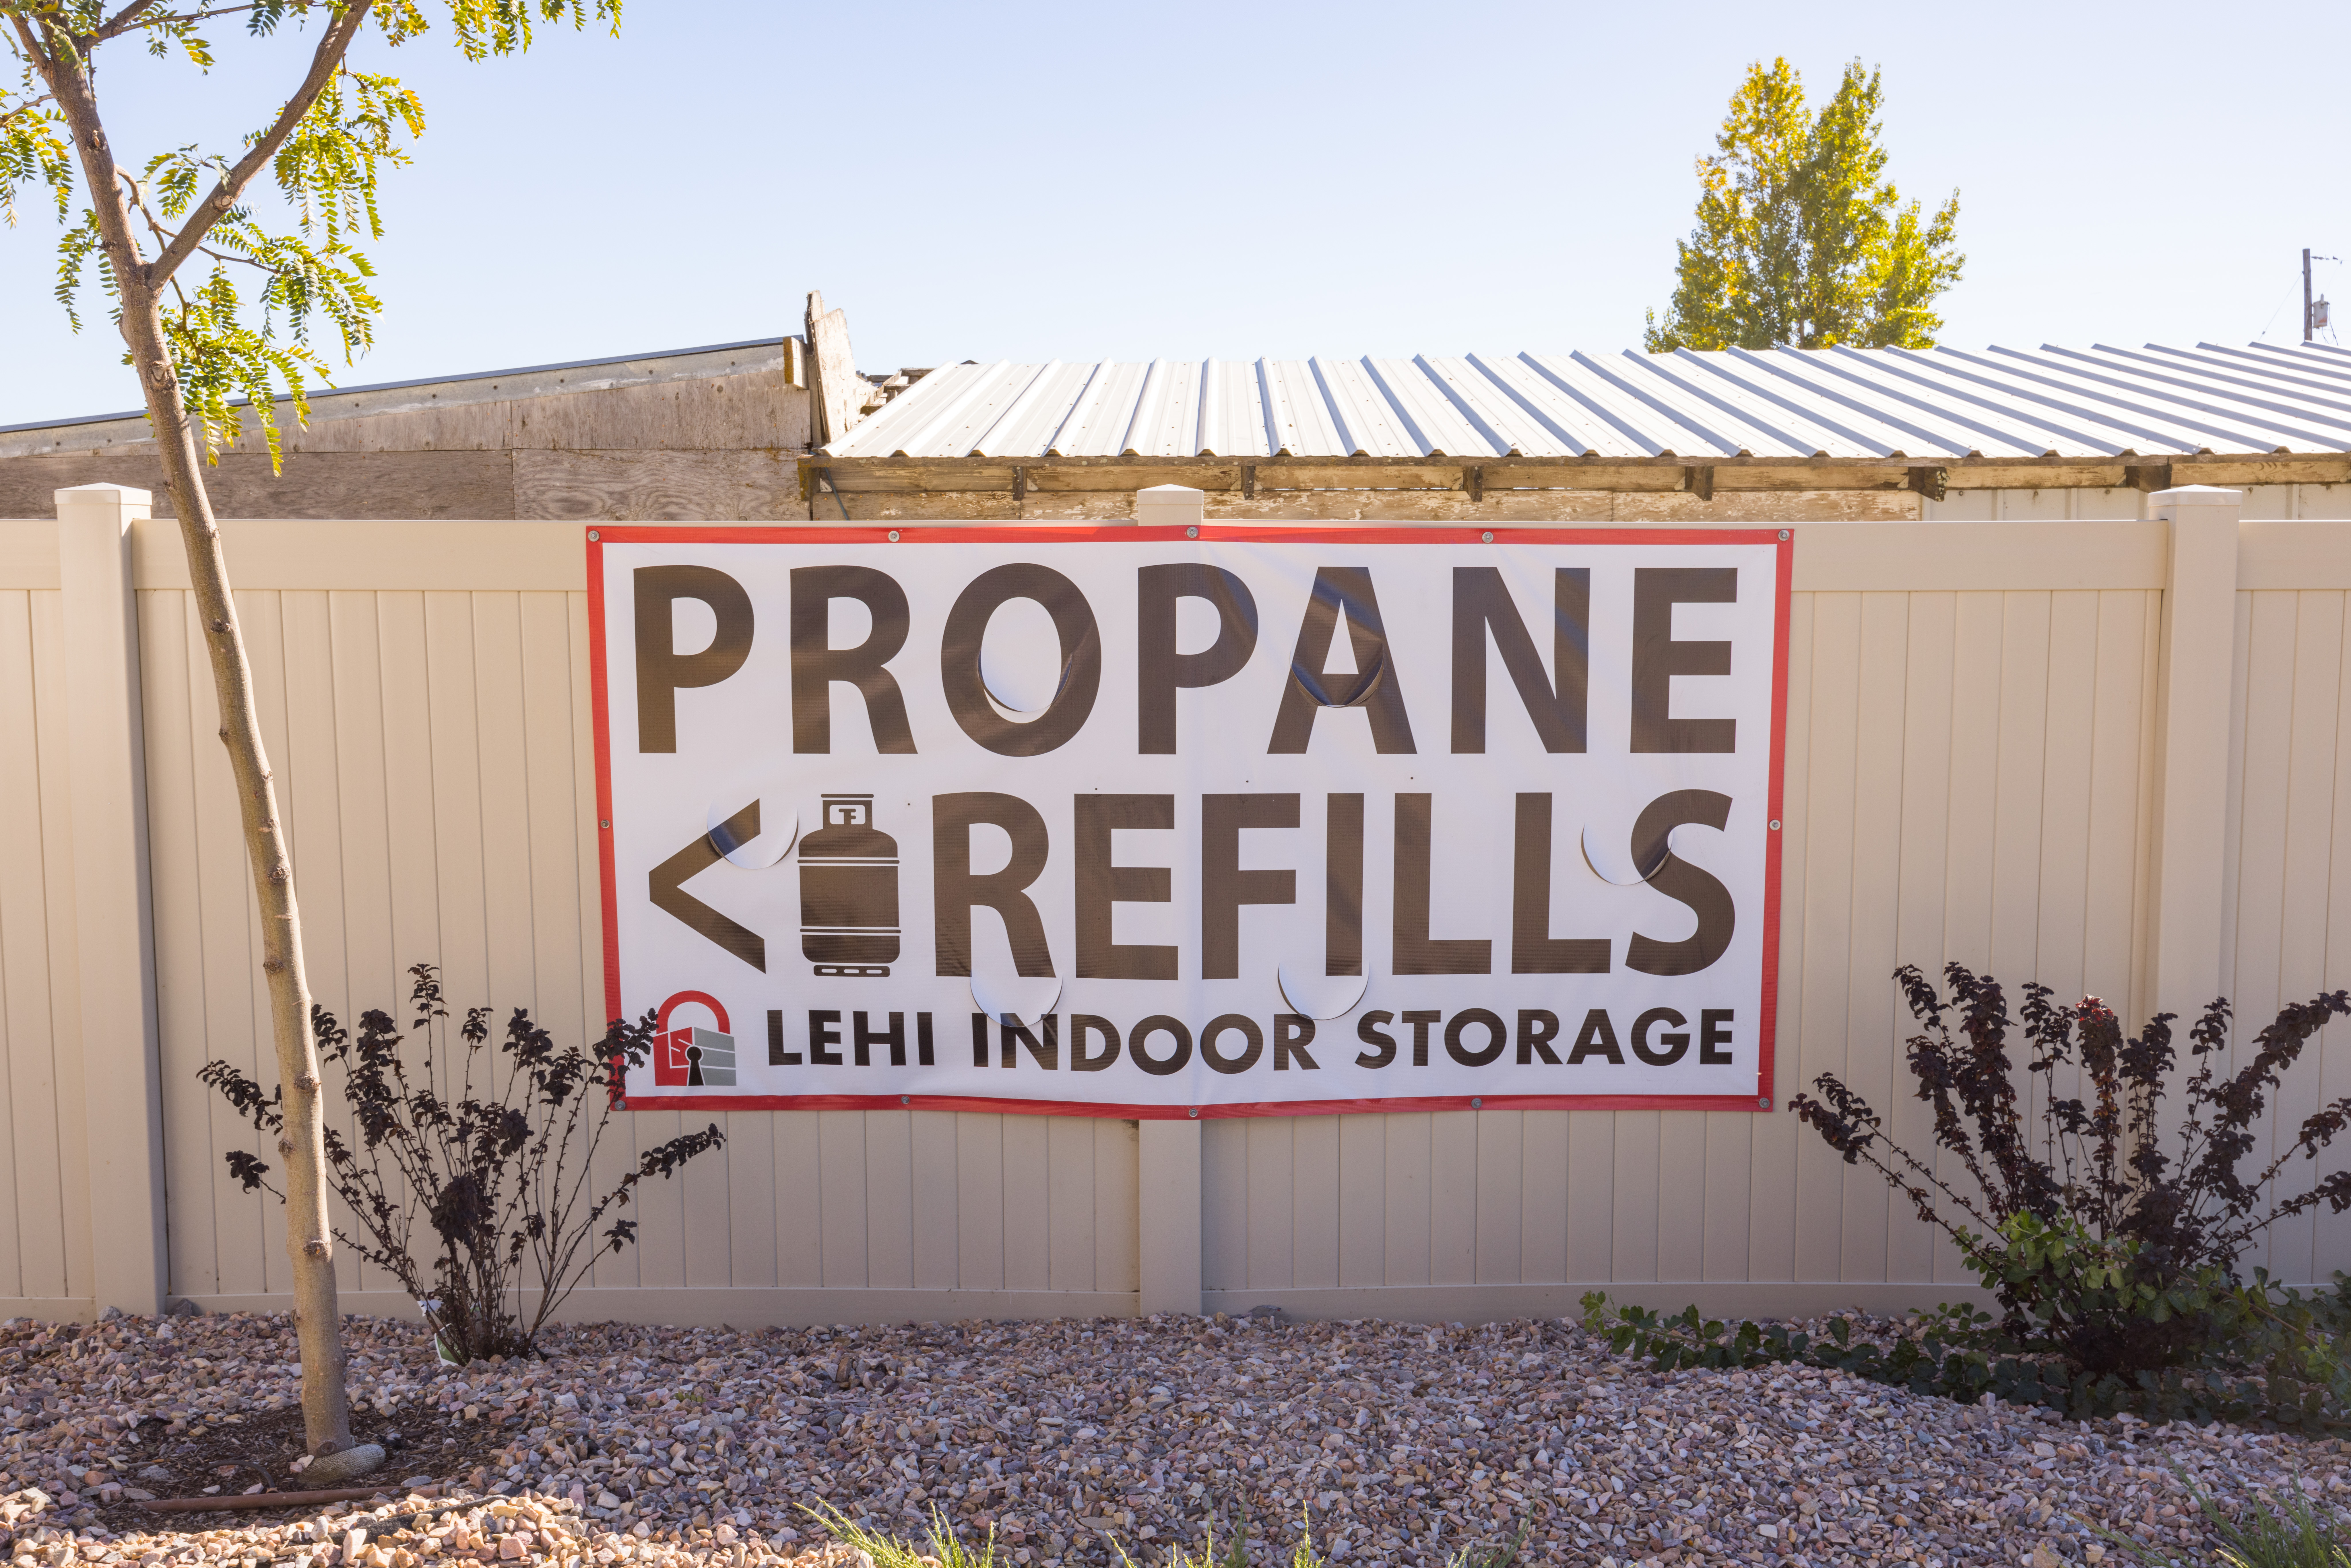 Propane Refills At Lehi Indoor Storage, Lehi, UT 84043